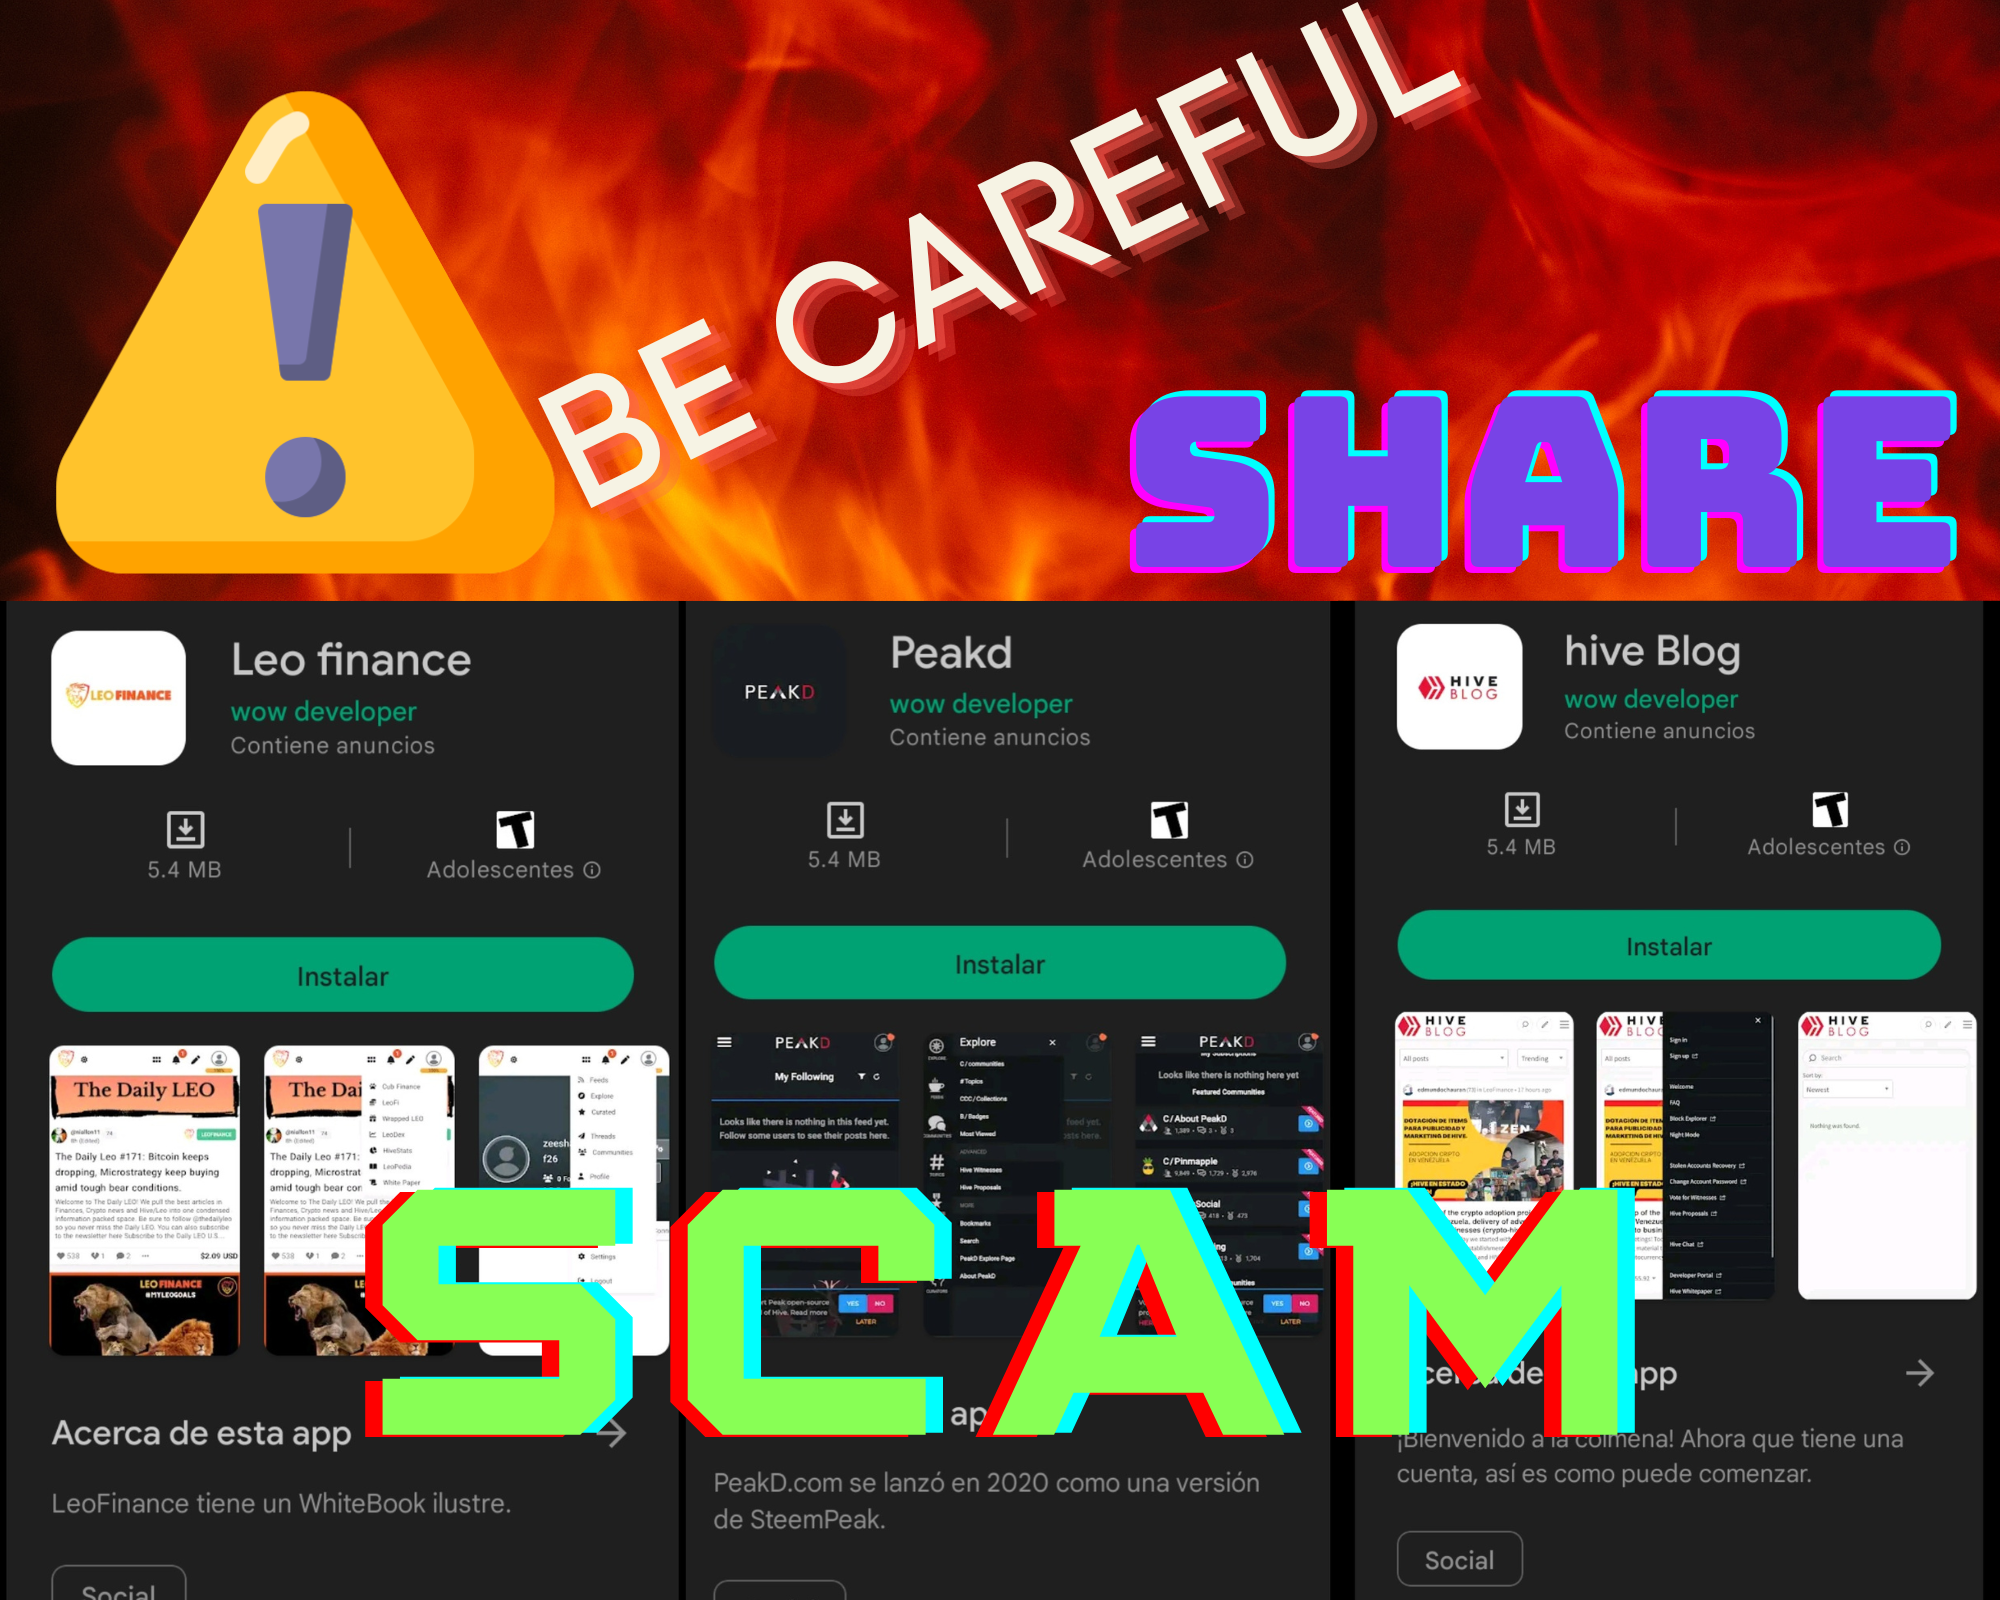 @p2eproject/engesp-be-careful-scam-apps-ten-cuidado-scam-apps